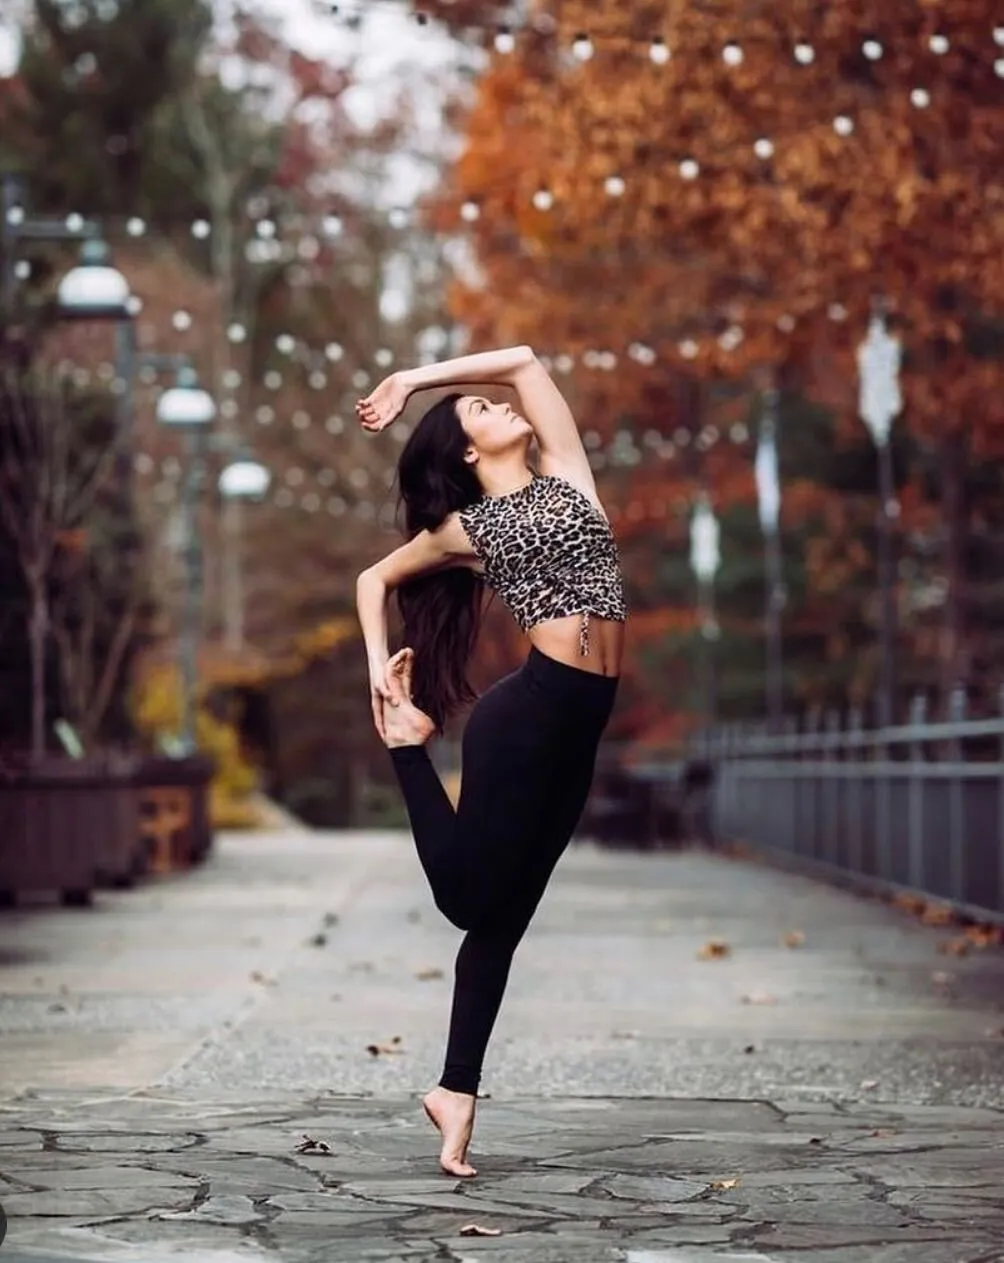 Woman doing a foot grab dance pose.